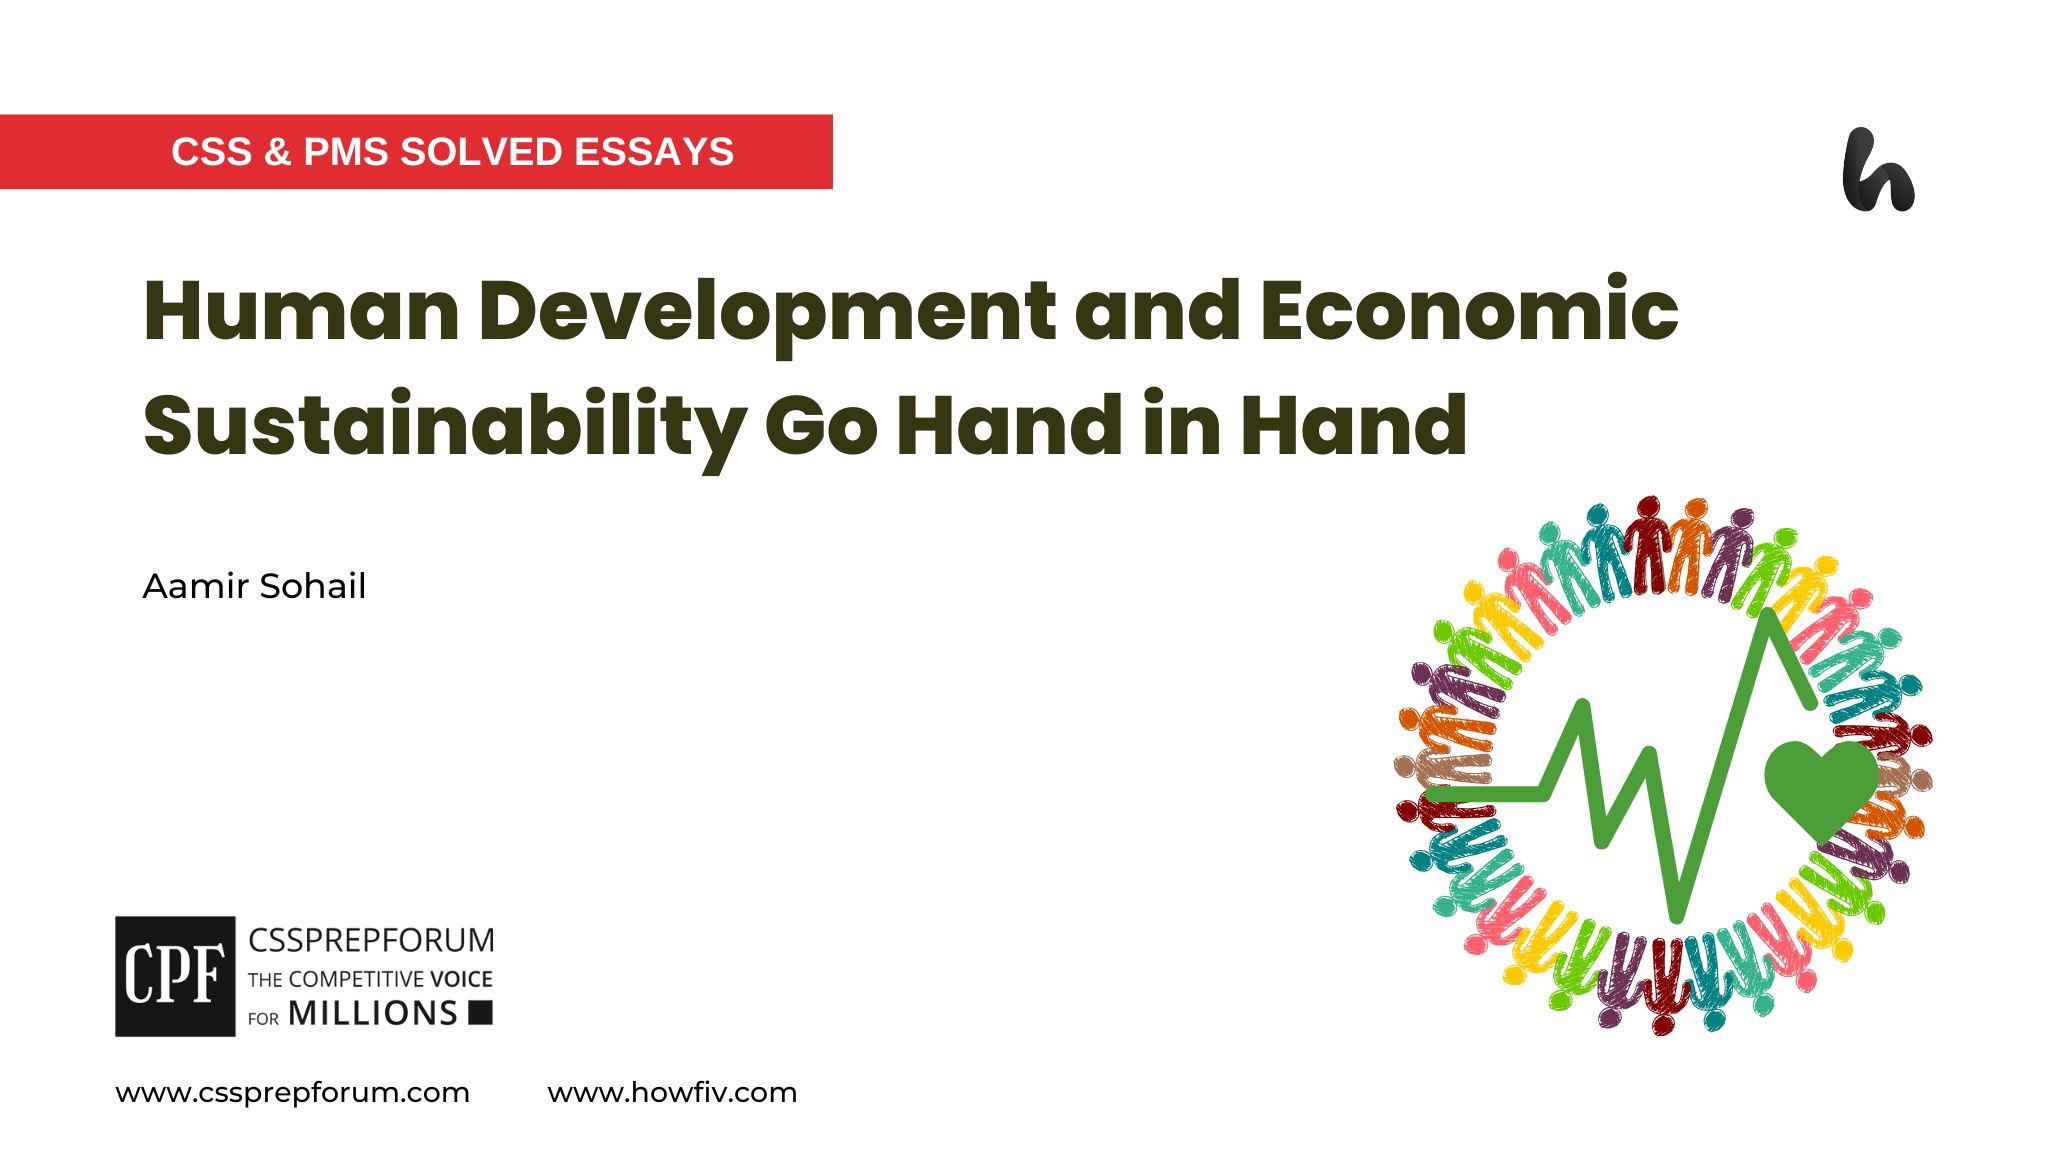 Human Development and Economic Sustainability Go Hand in Hand